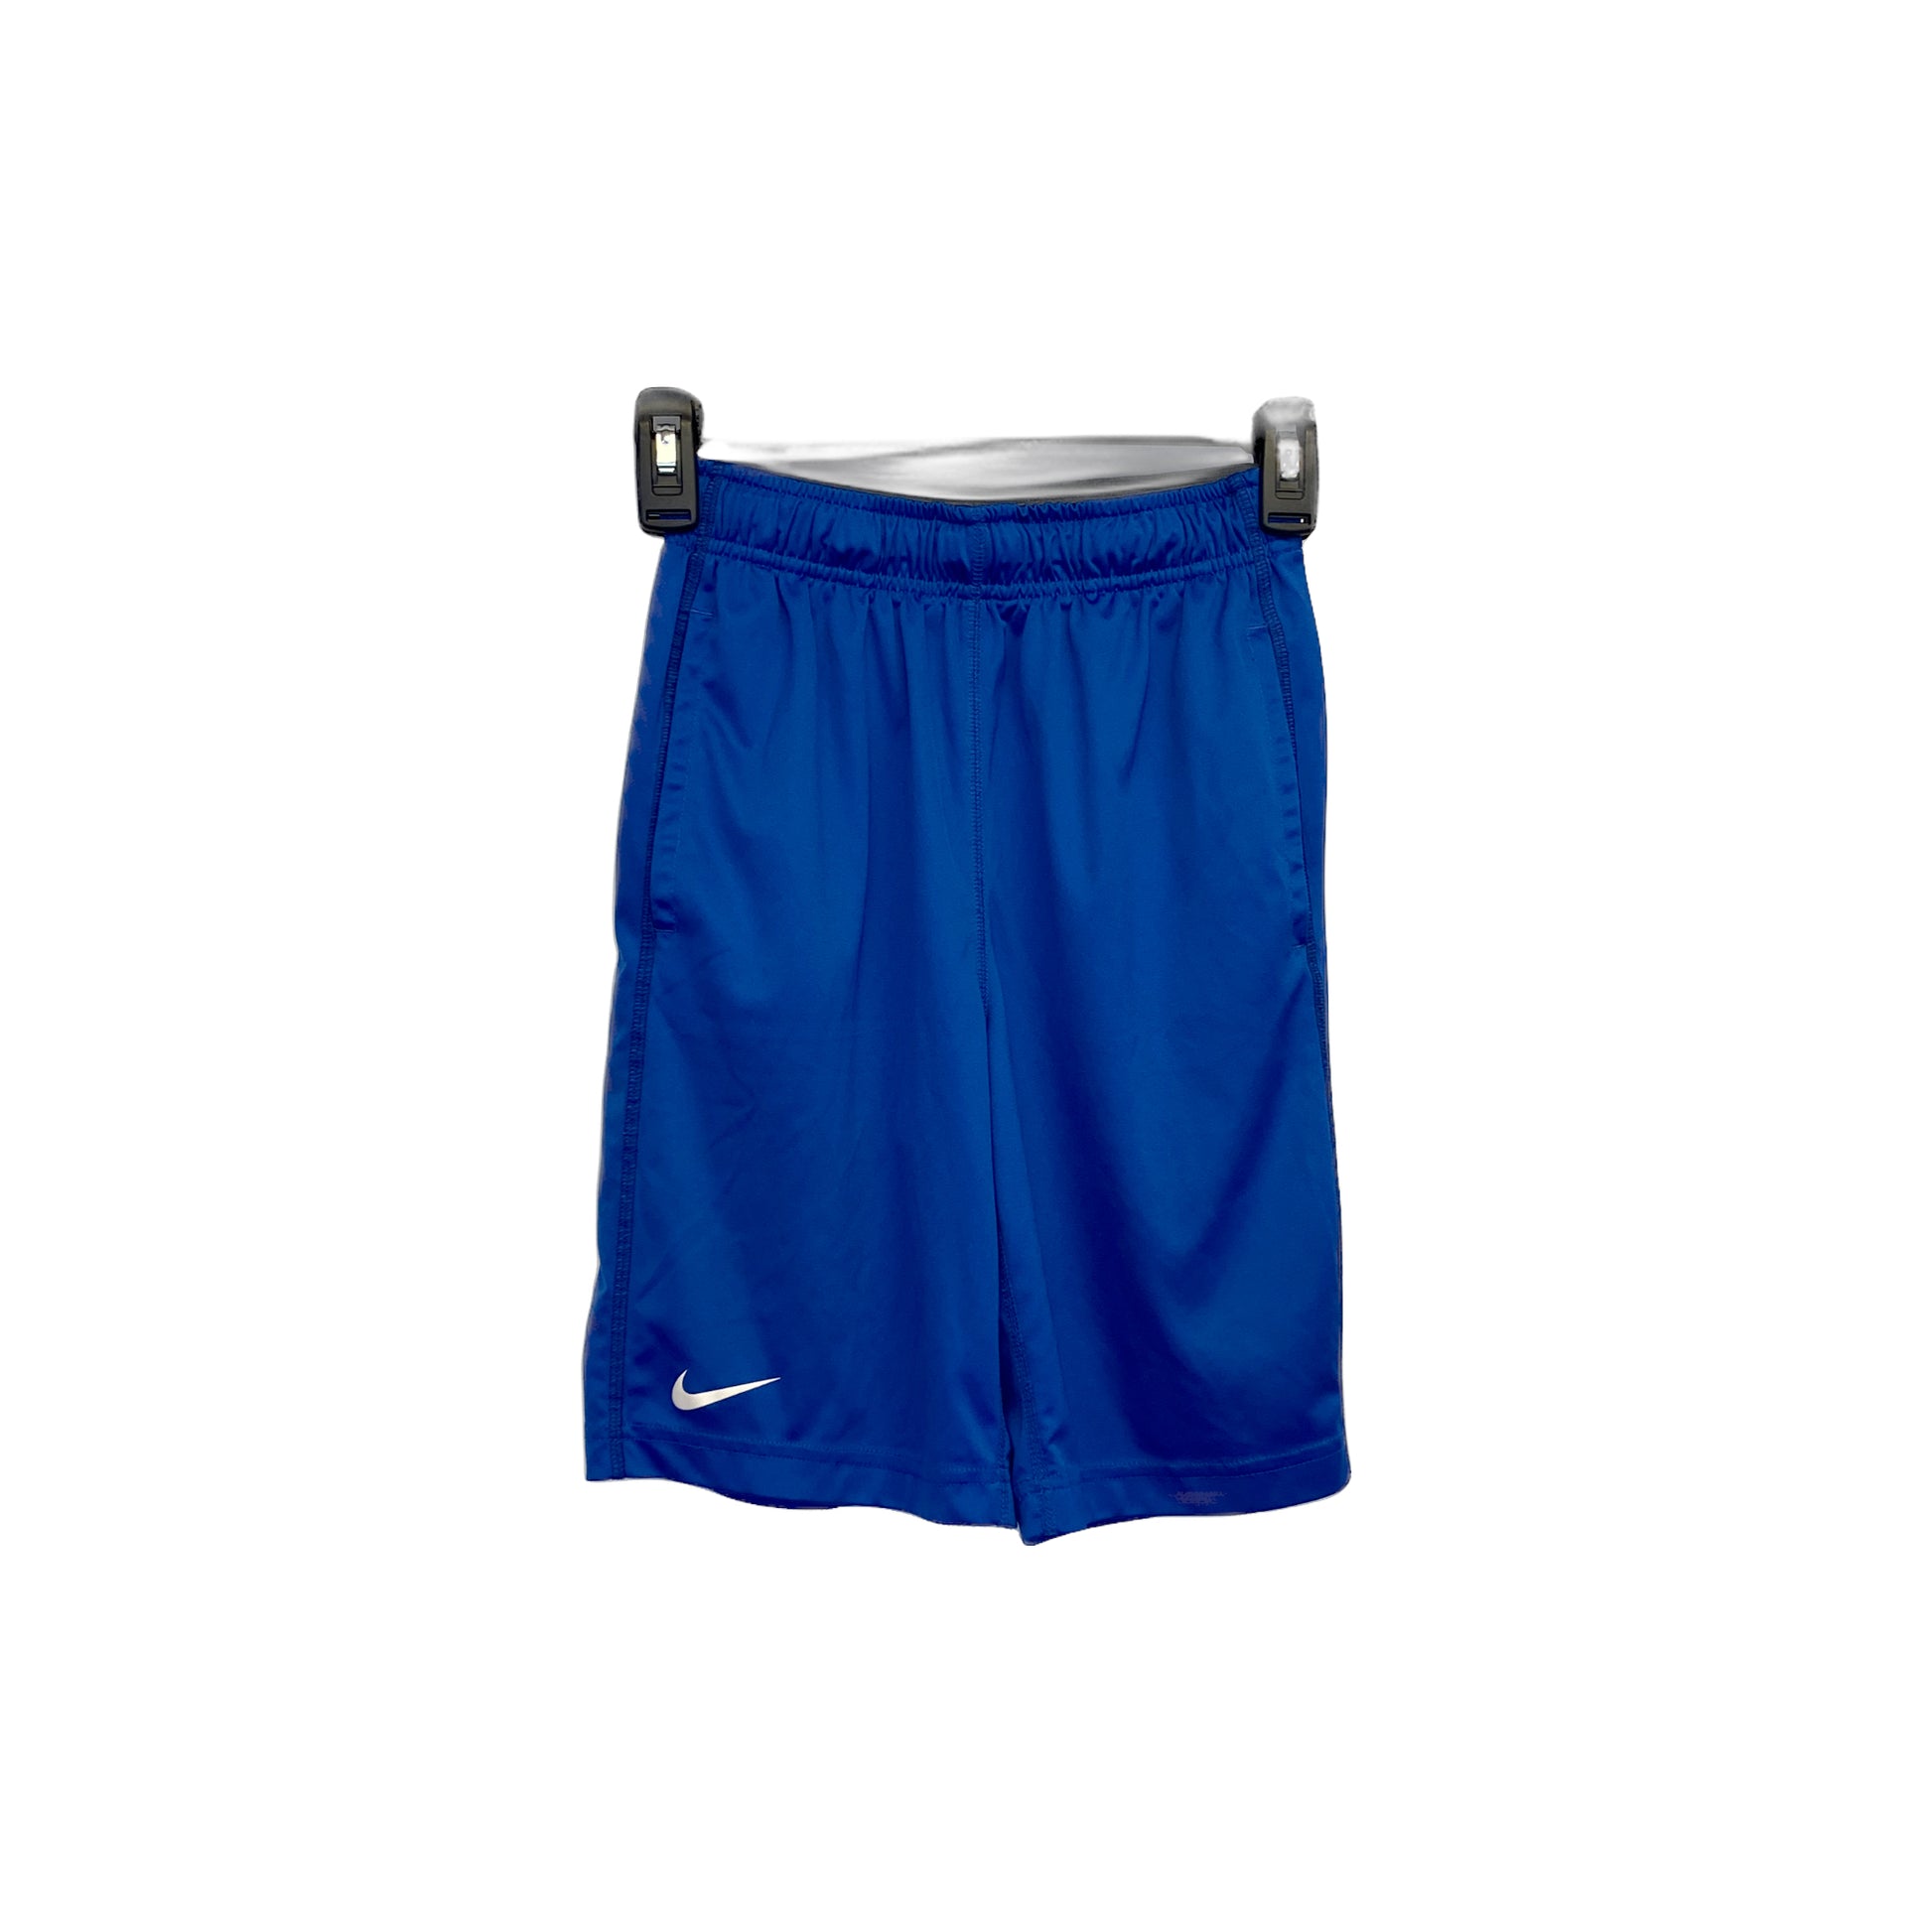 Nike Dri-Fit Shorts Blue - M